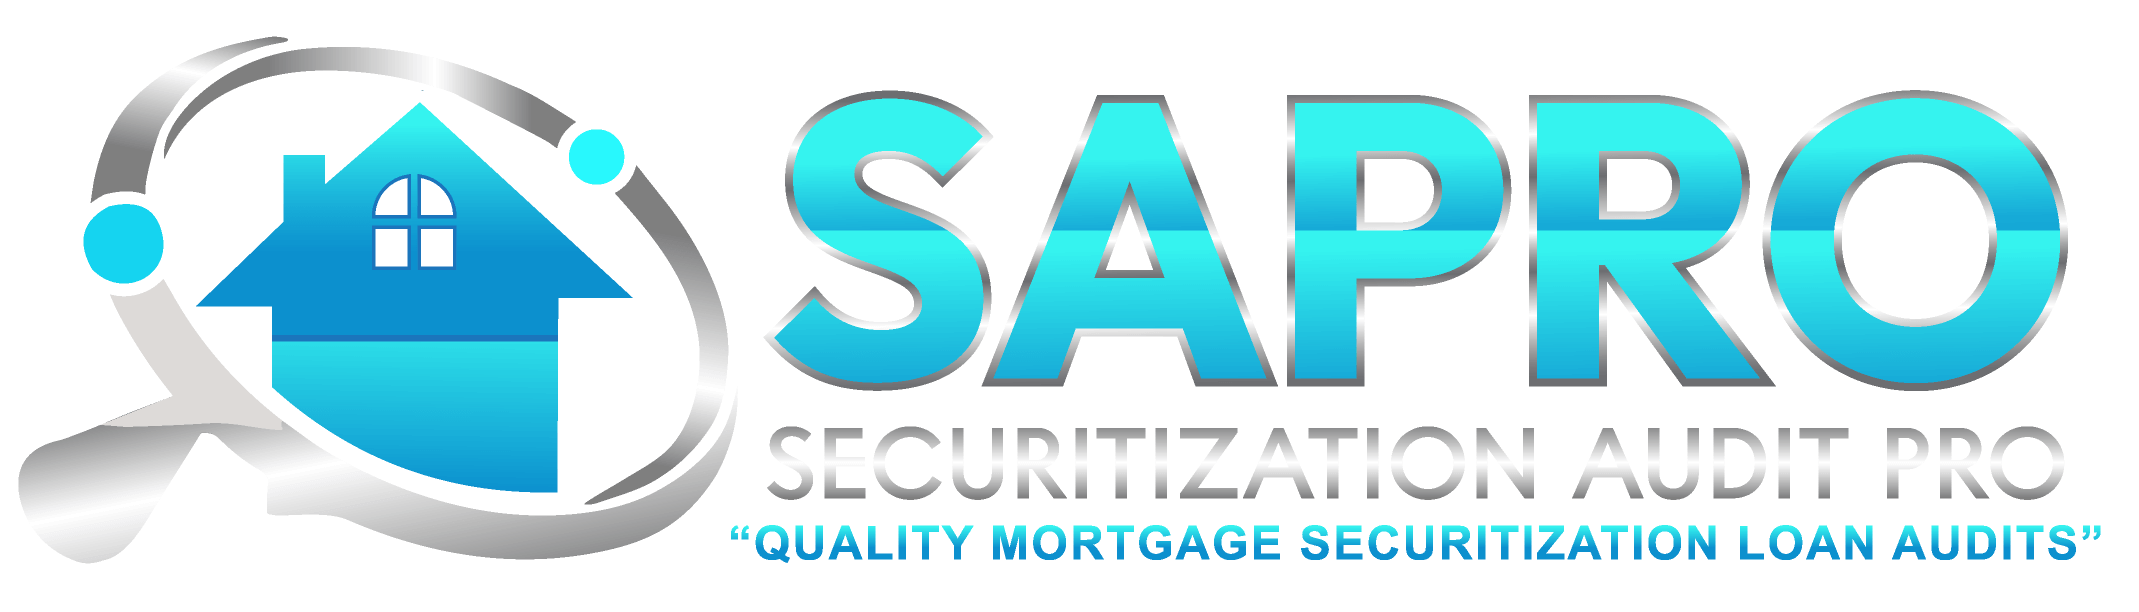 securitization-audit-logo